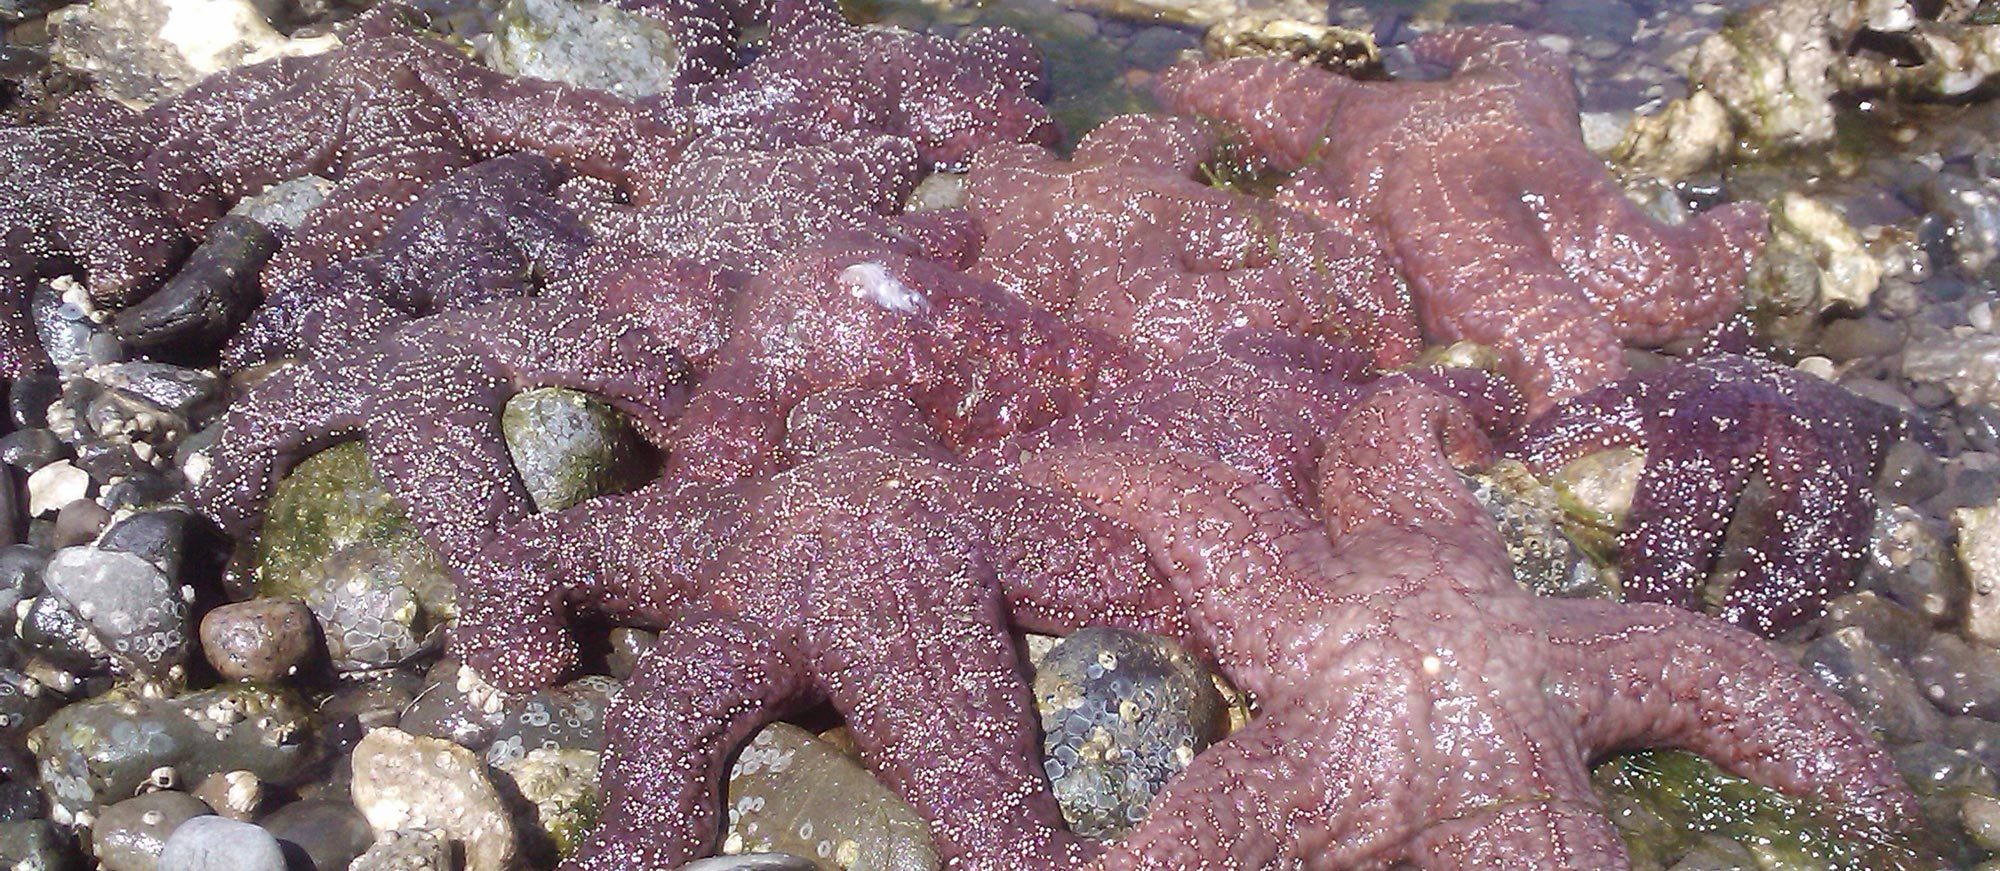 image of starfish used as metaphor for feedback mindmeld session